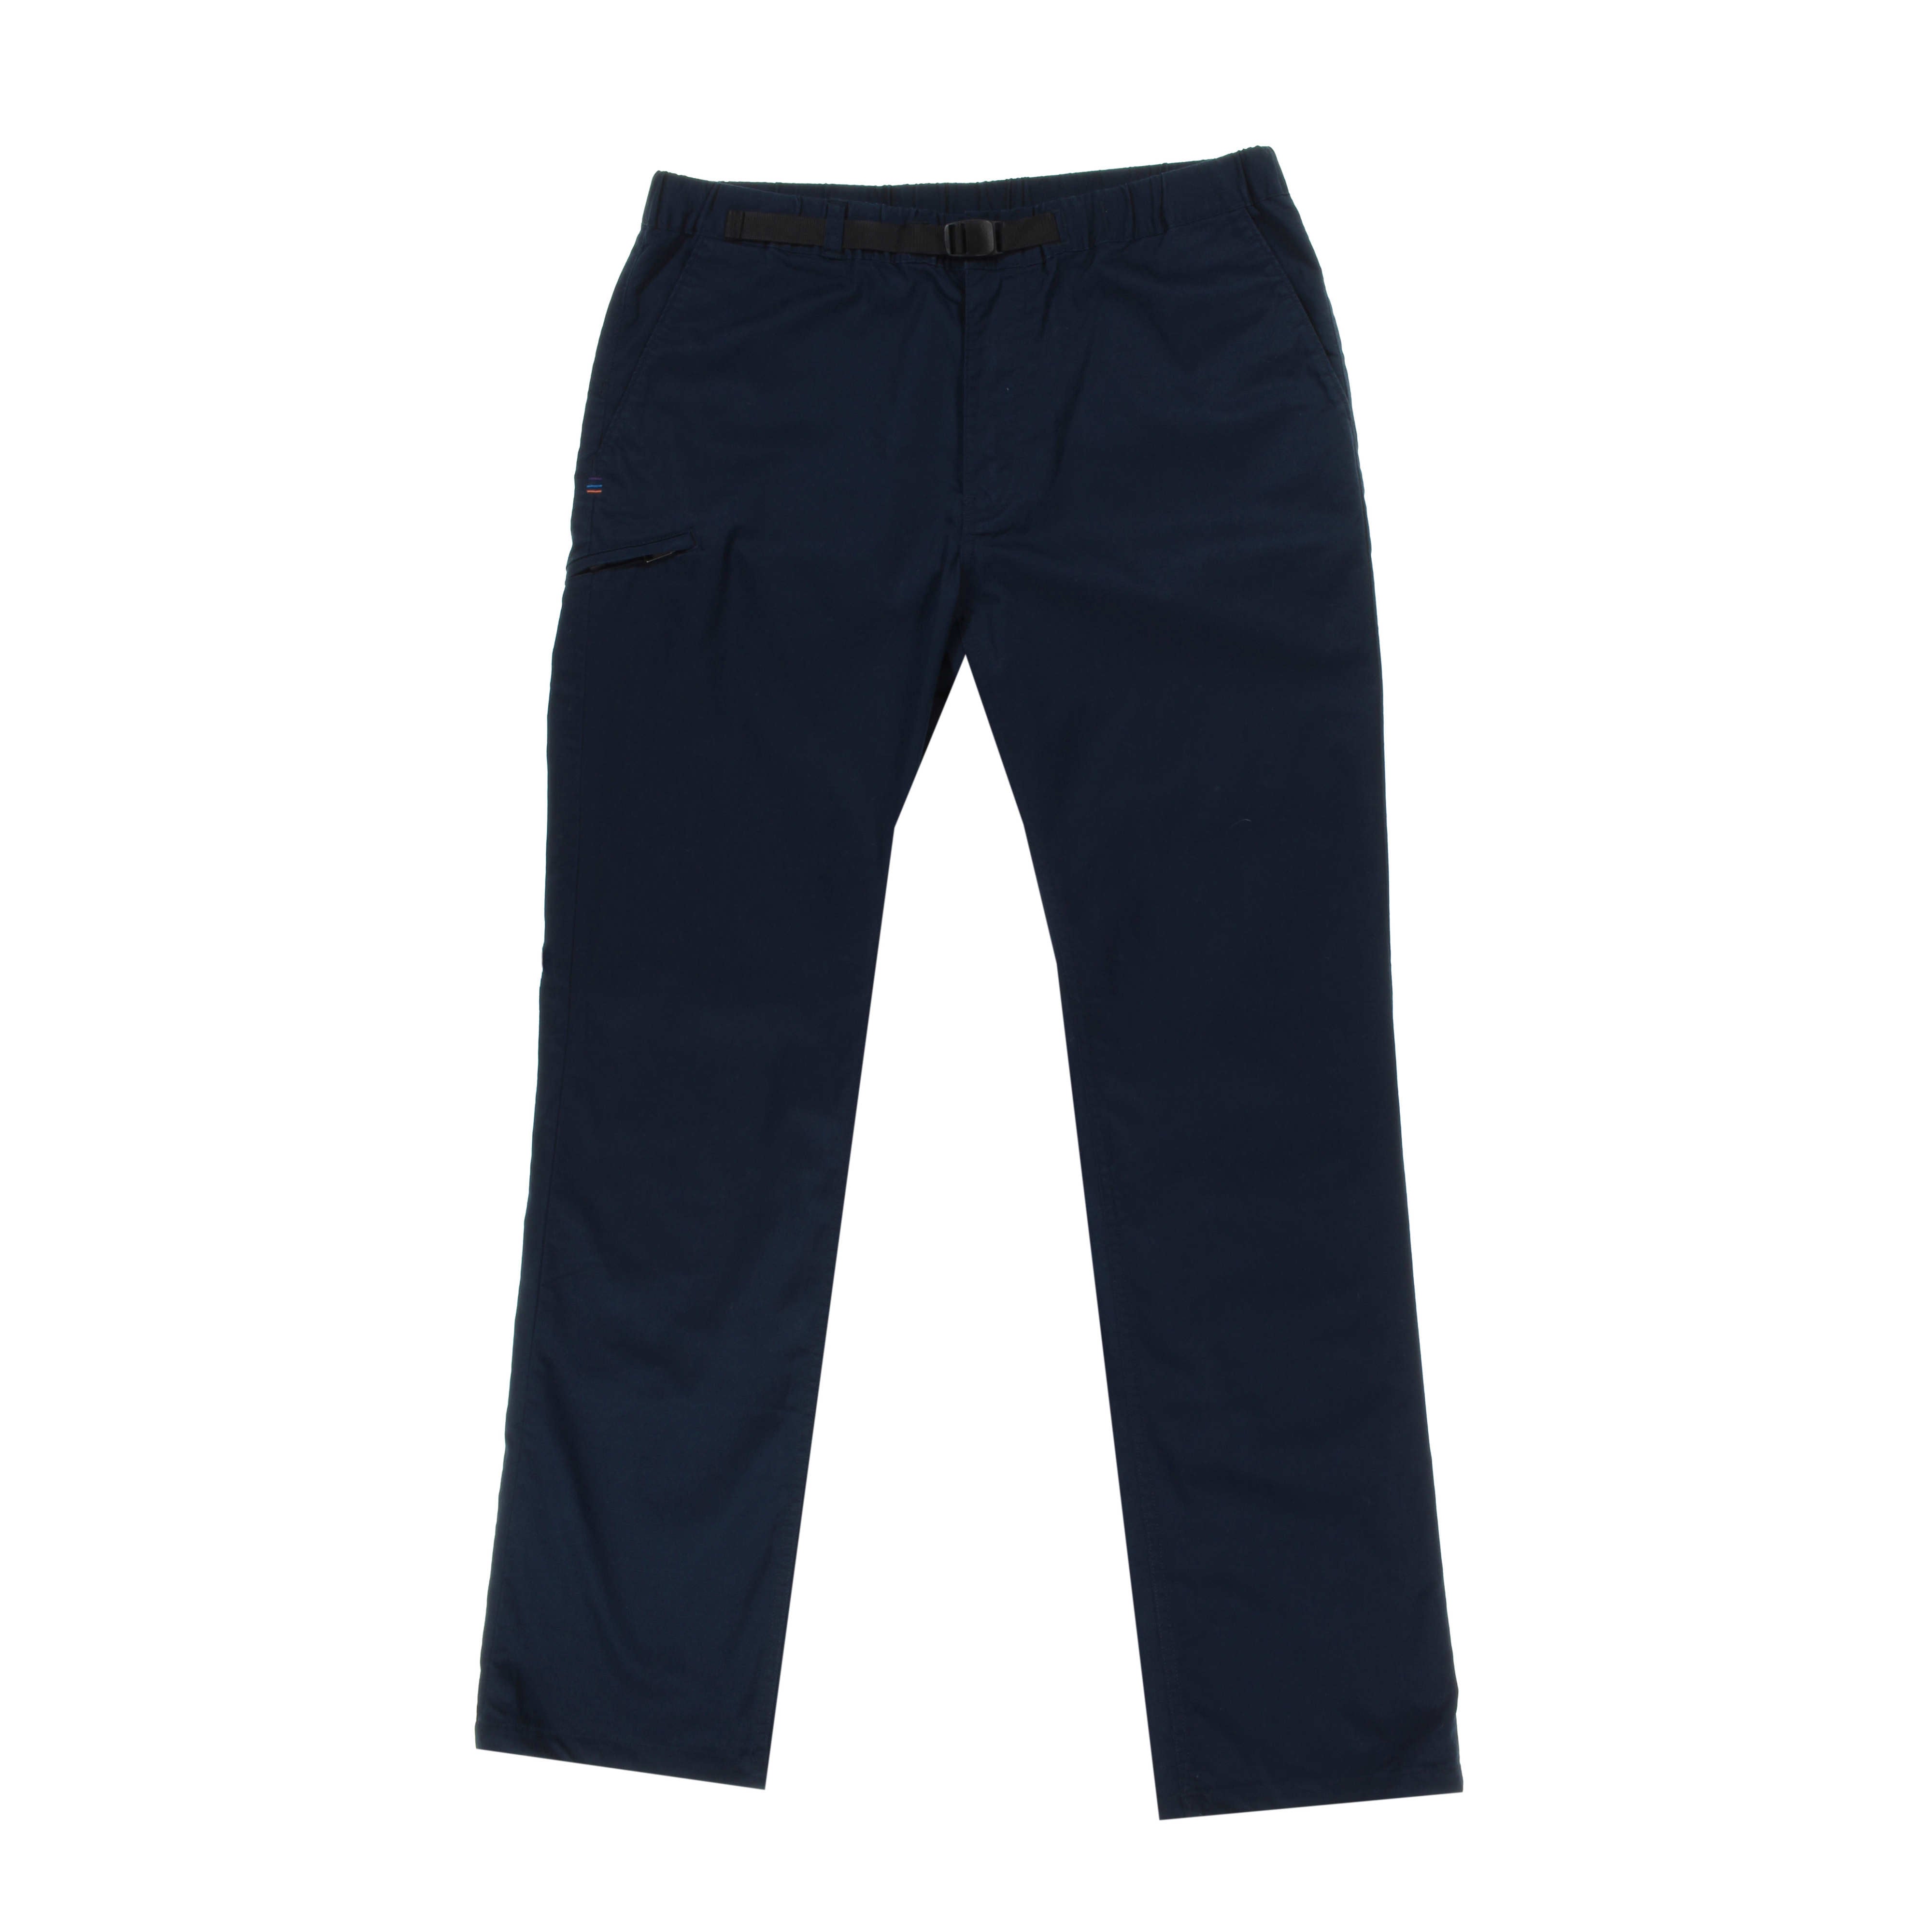 Patagonia Organic Cotton Gi Pants - Casual trousers Men's